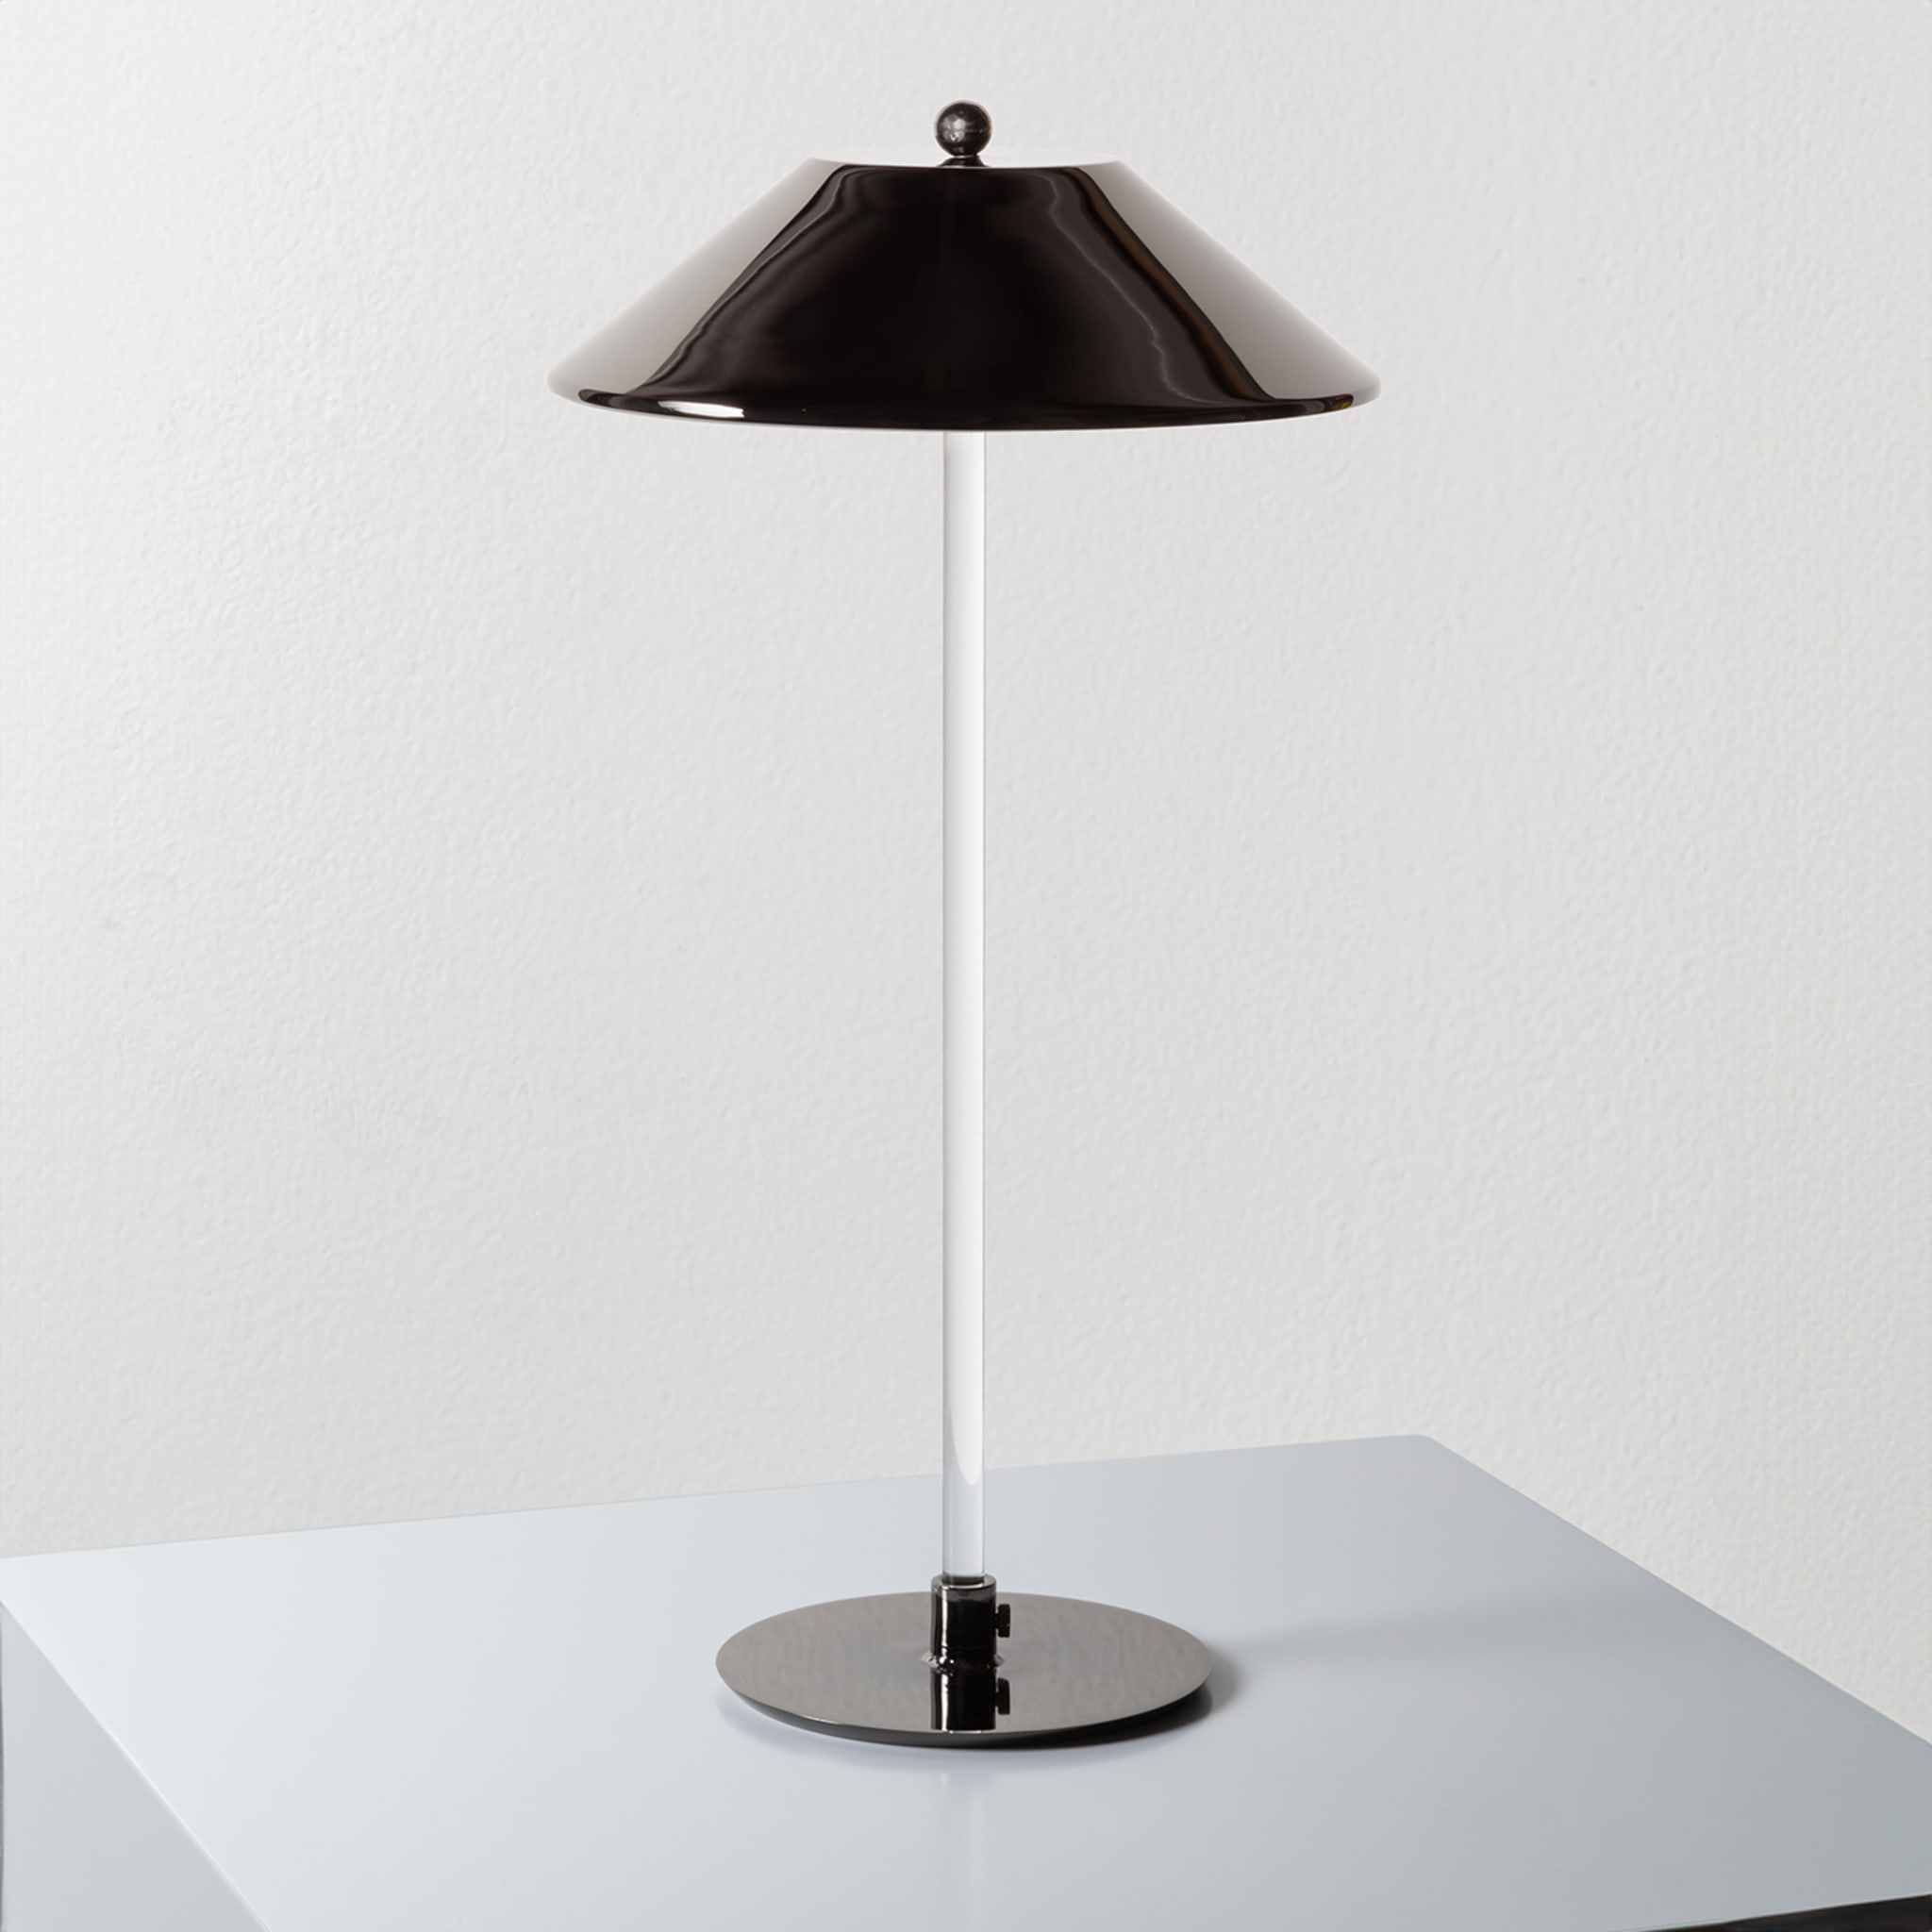 Candilee Lampe à poser noire polie par Isacco Brioschi - Vue alternative 1